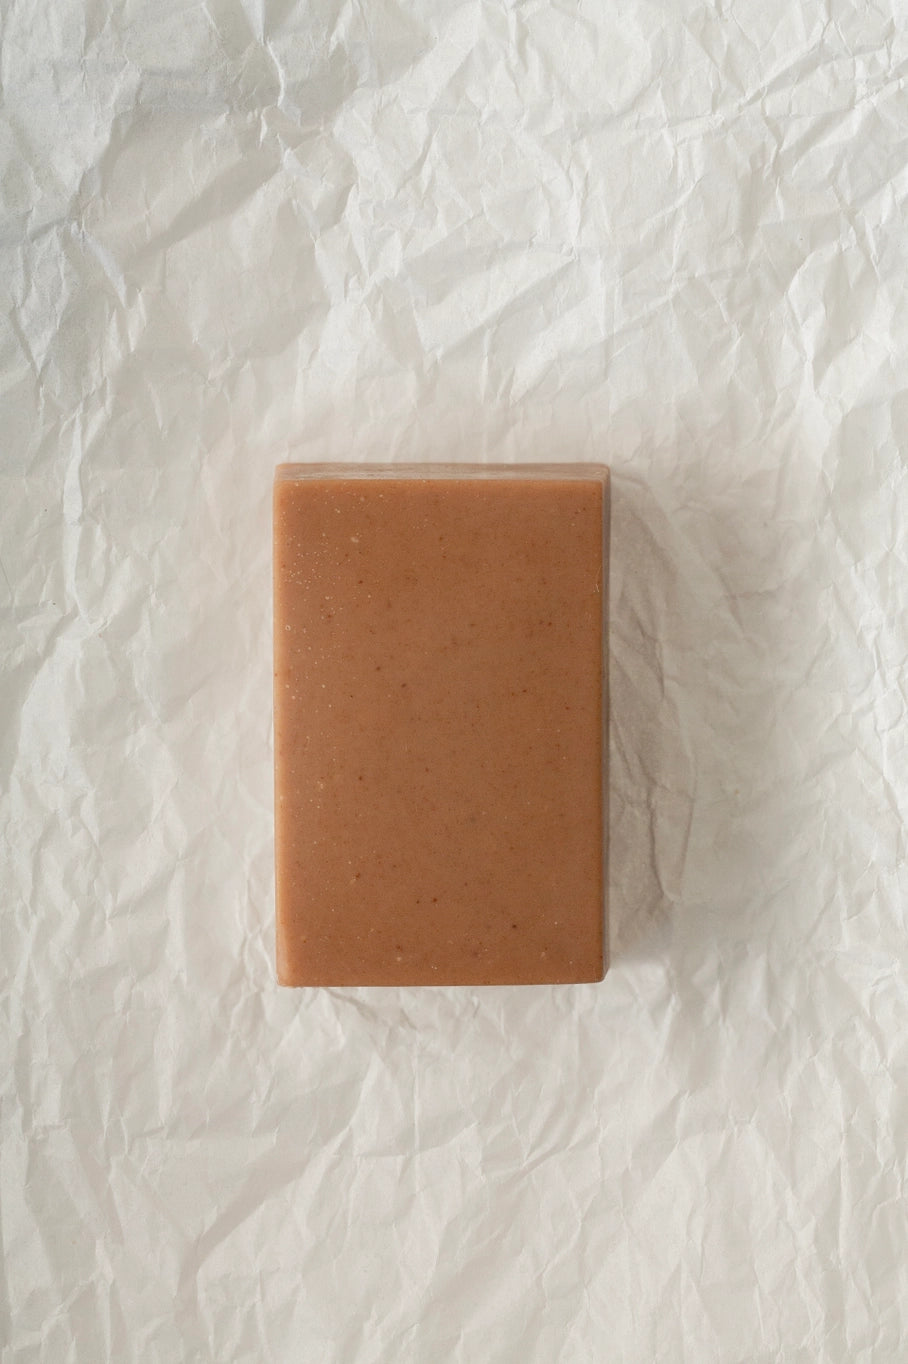 Desert Rose Red Clay Bar Soap